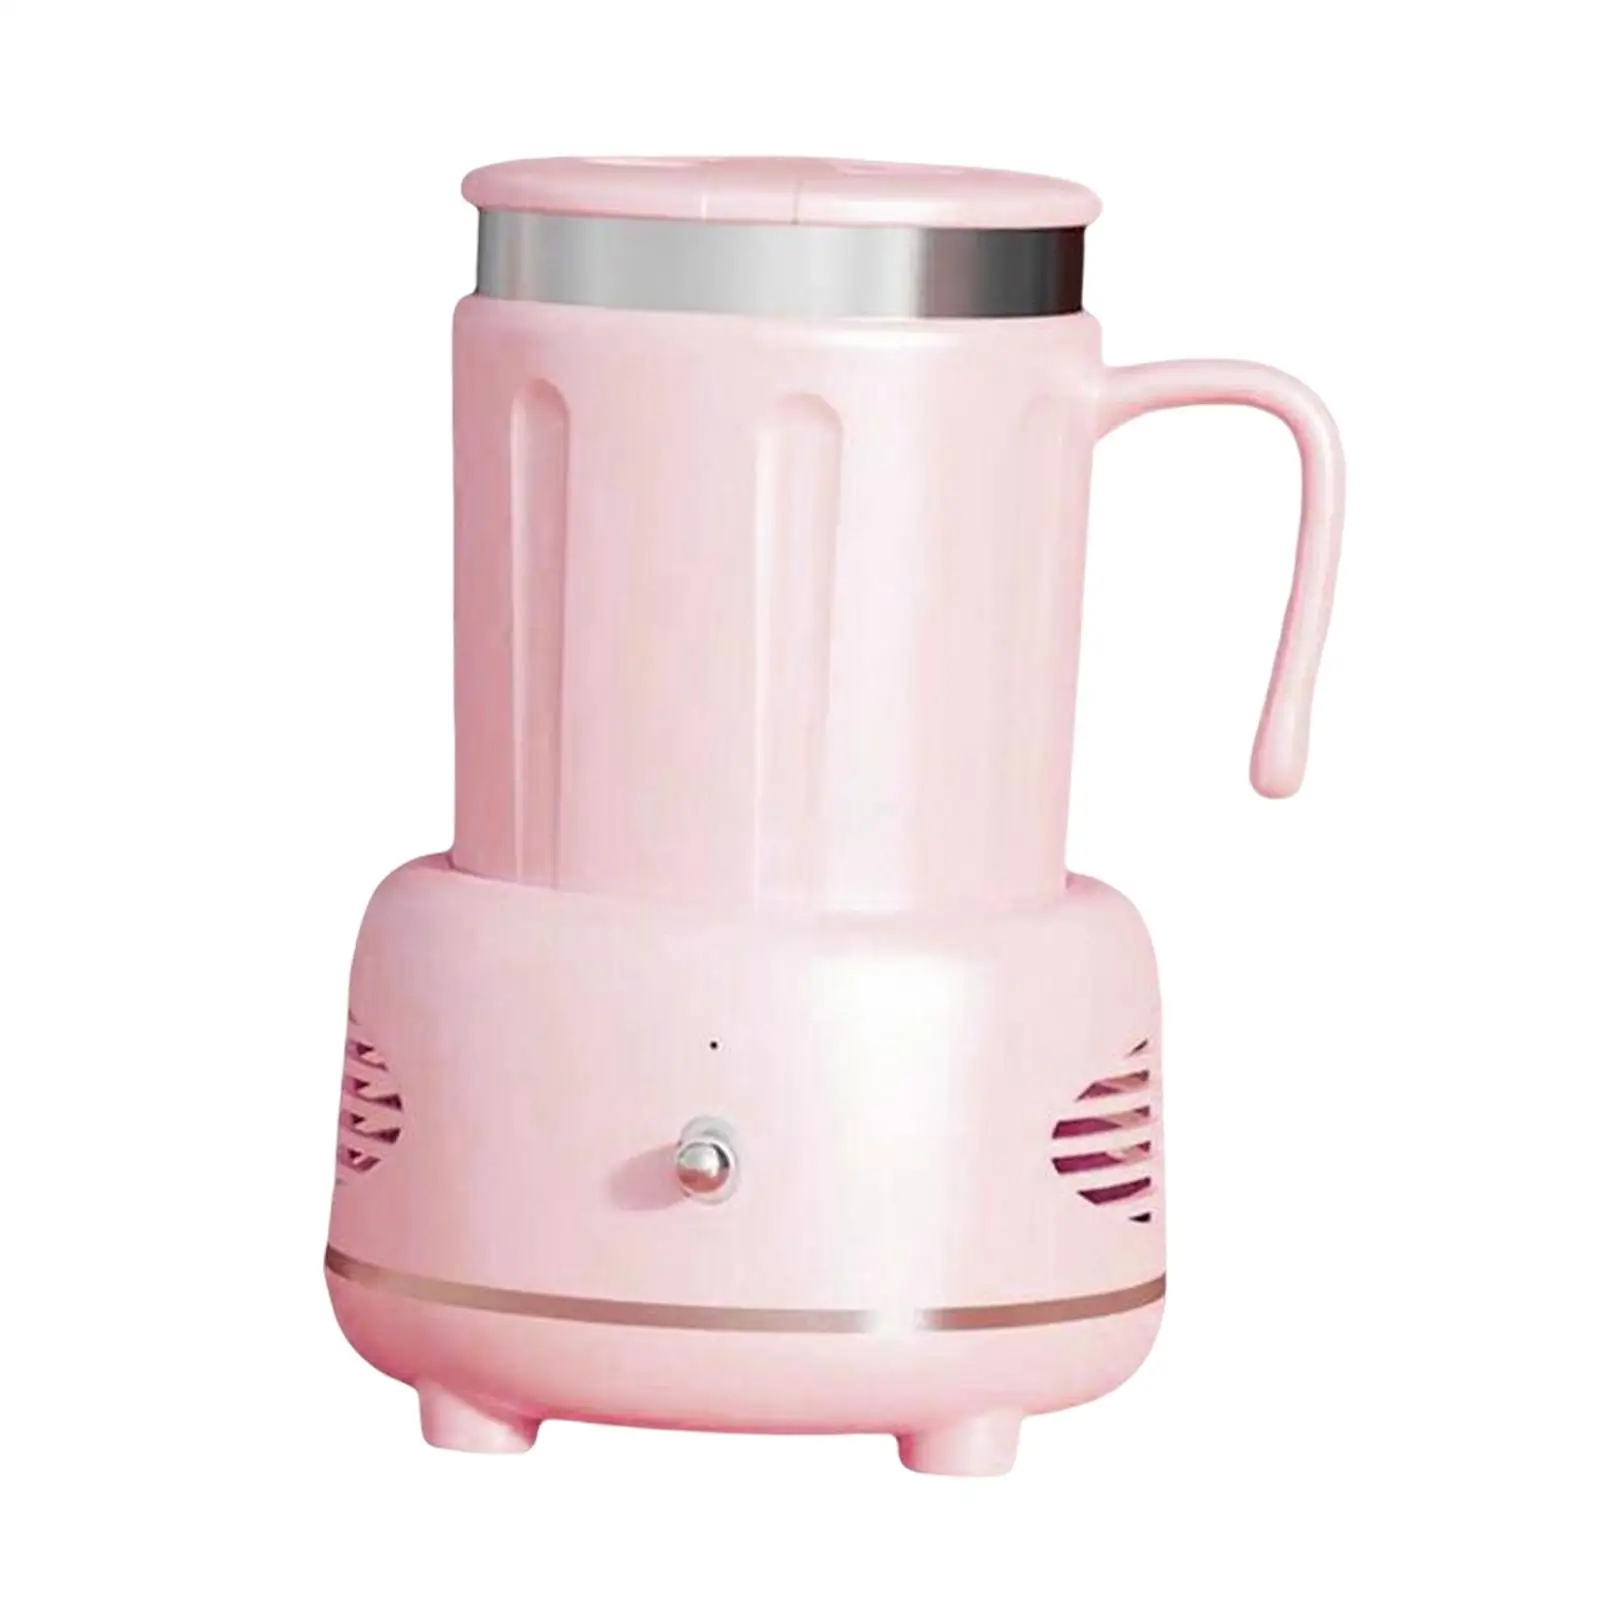 Portable Cooler Warmer Cup Mug Heating Pad Power Off Chip Beer Cooler USB Heater Coaster Drink Cooler for Tea Beer Milk Coffee